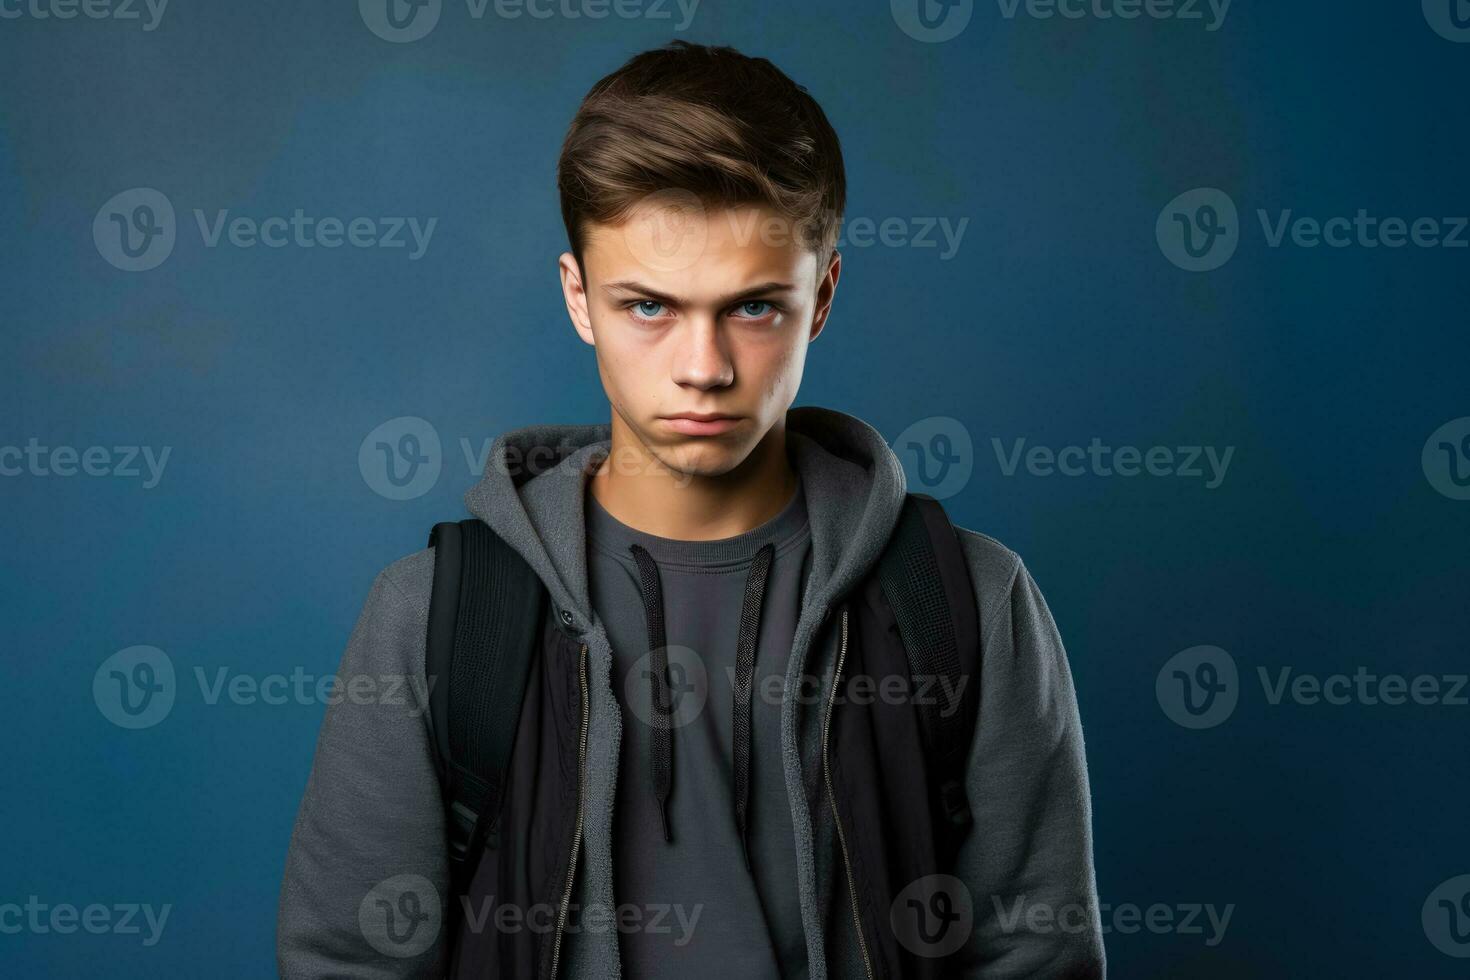 tonåring med dyster uttryck i skola hall isolerat på en lutning bakgrund foto